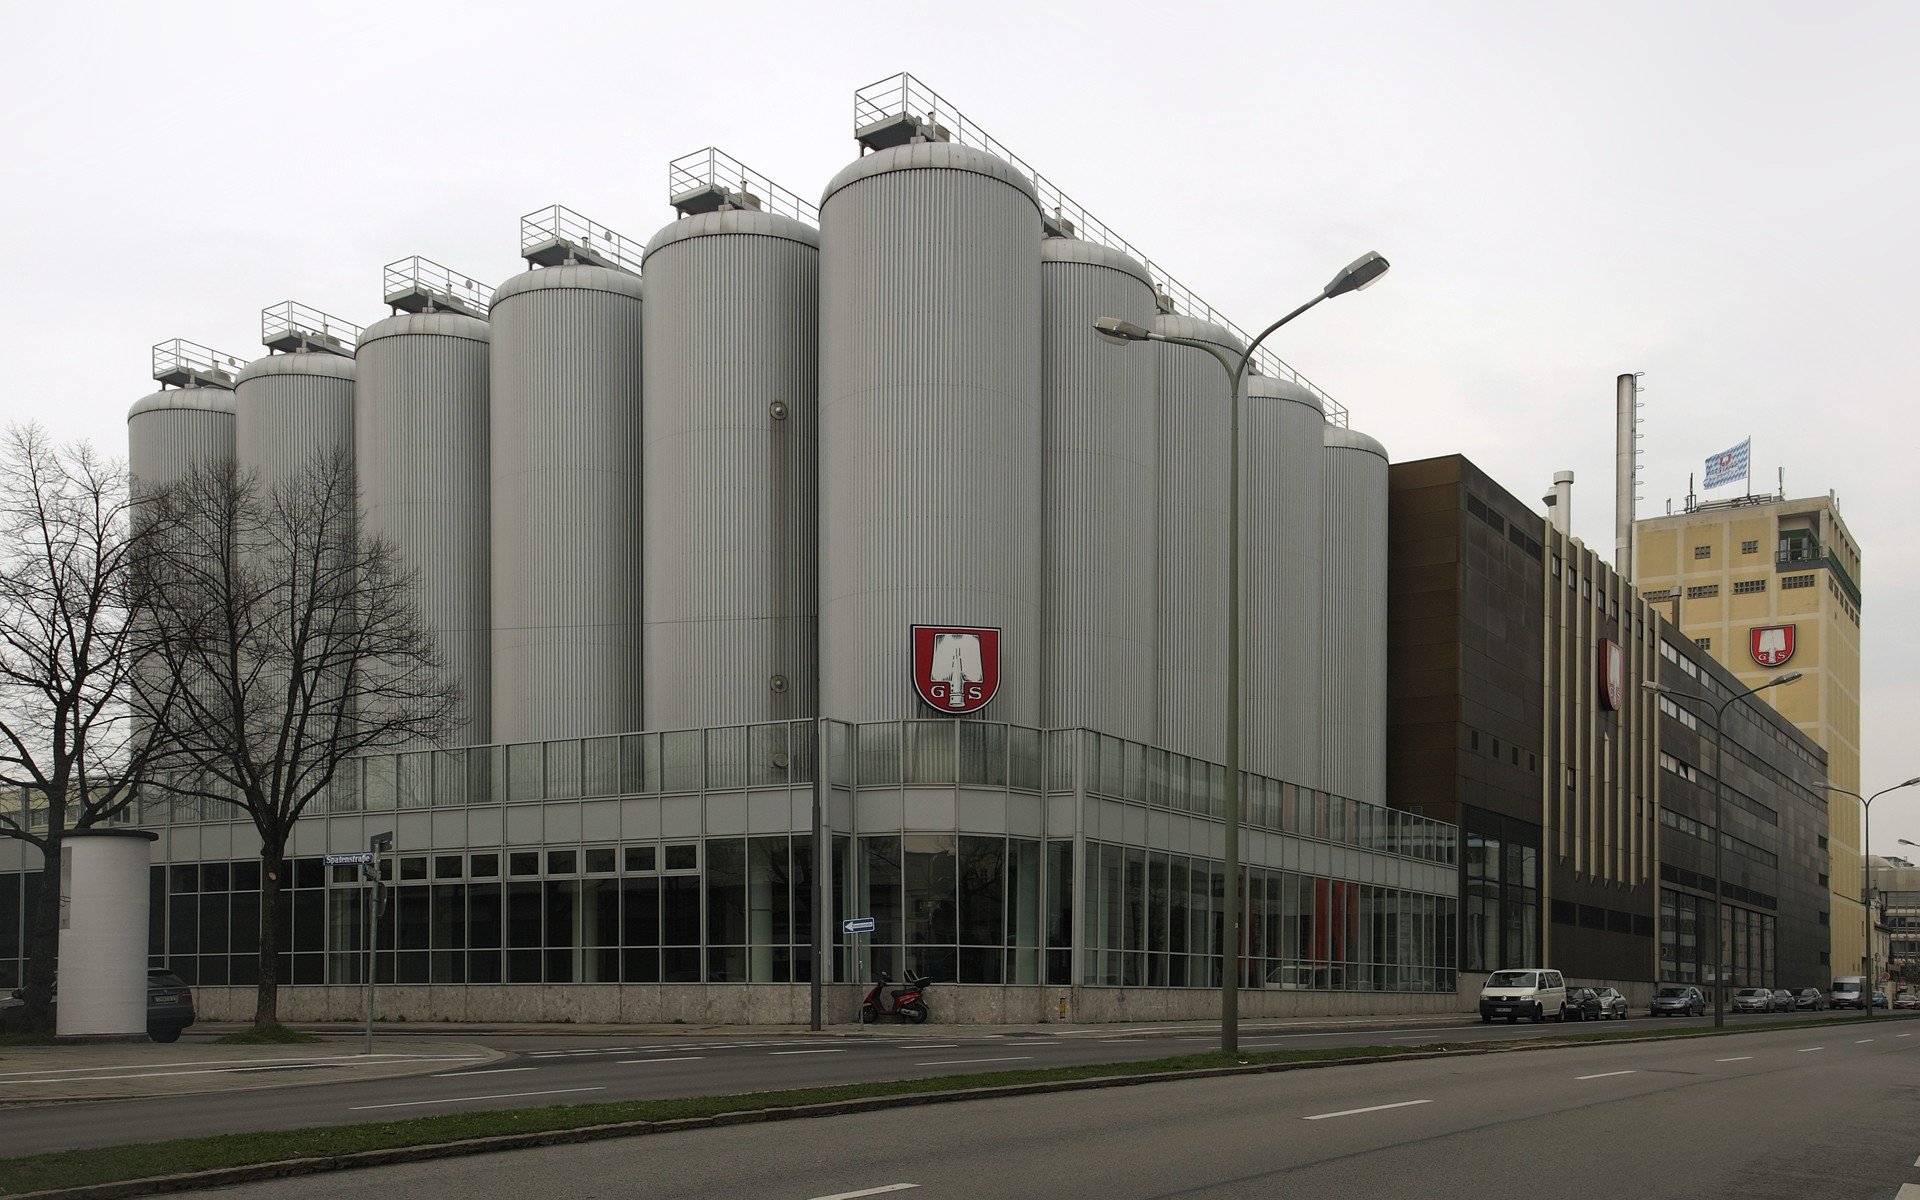 Spaten Brauerei brewery from Germany